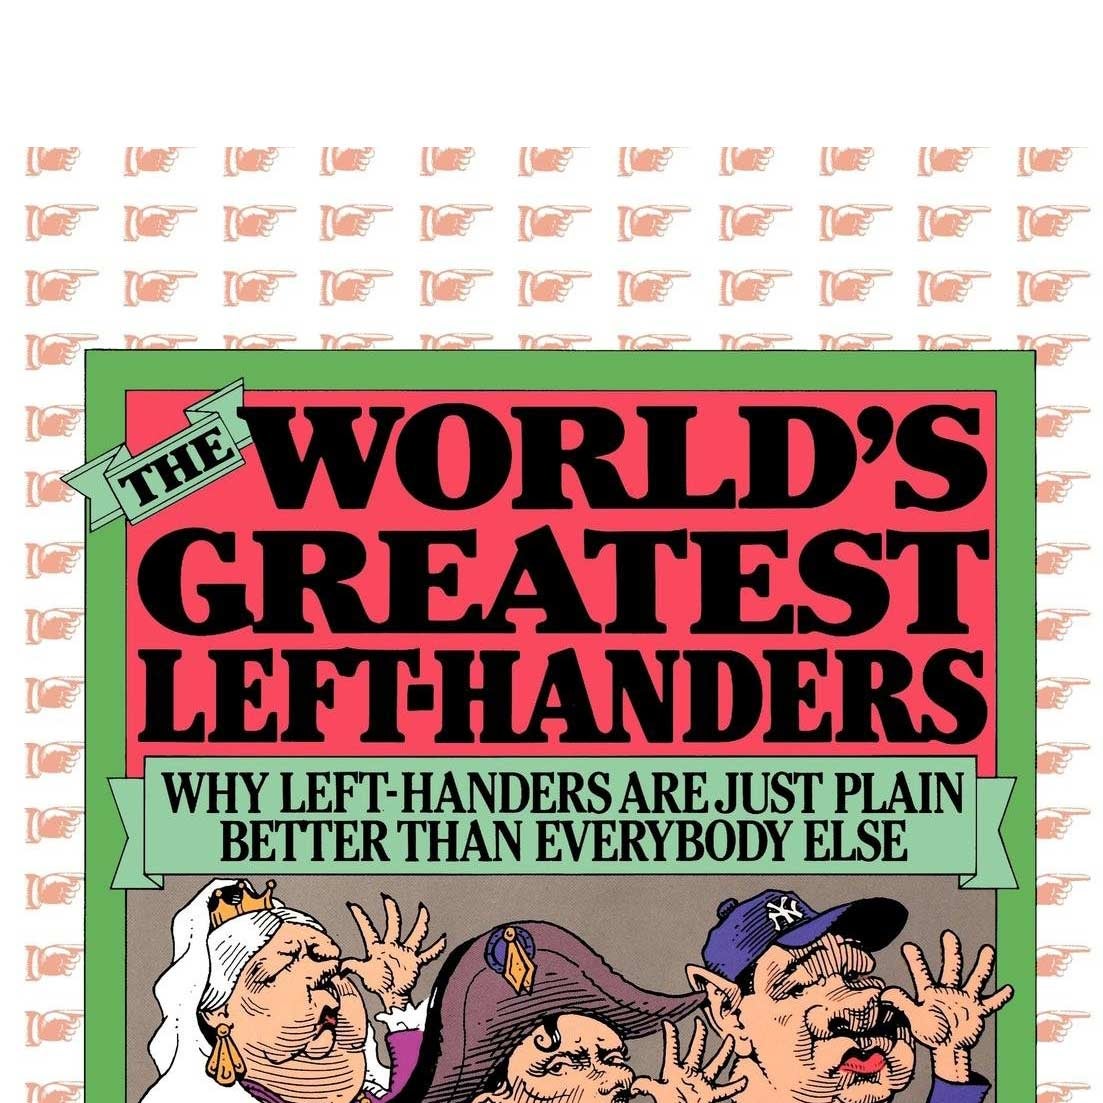 The World's Greatest Left-Handers